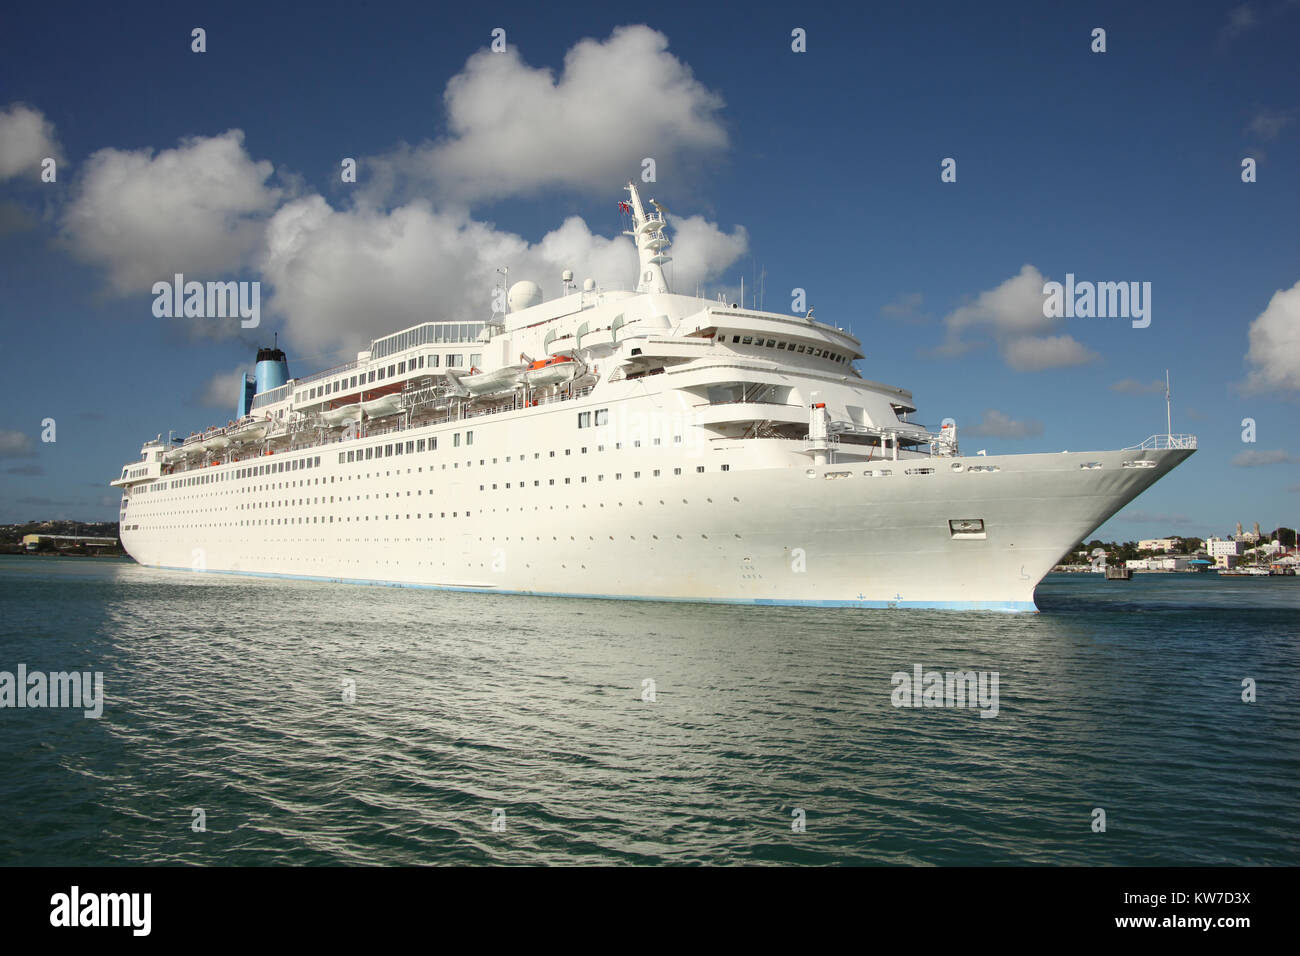 Traditional cruise ship in the harbor of St John's, Antigua, Caribbean. Stock Photo